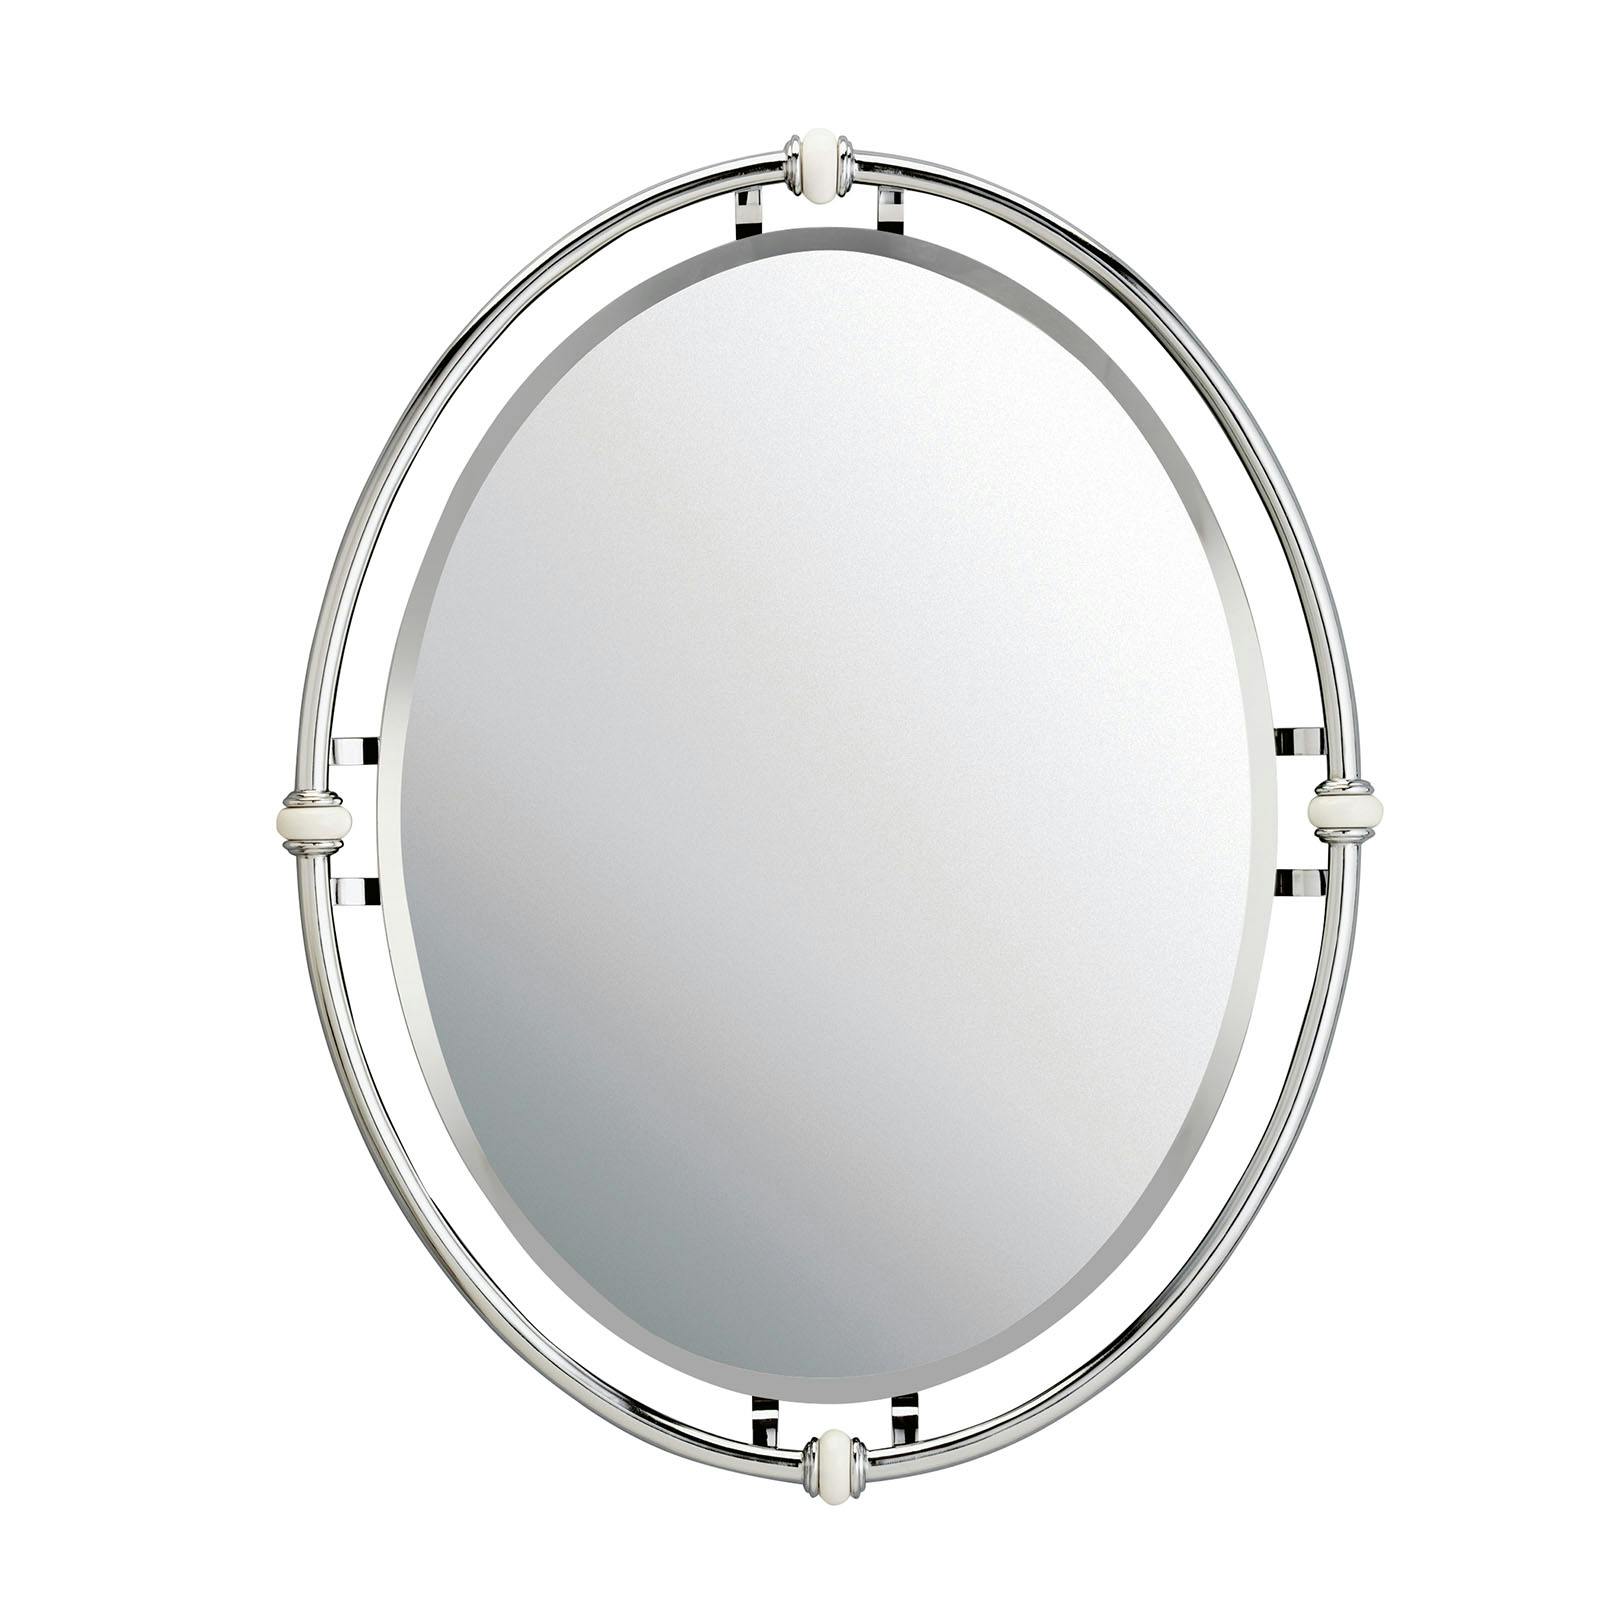 Pocelona™ Vintage Mirror Chrome on a white background